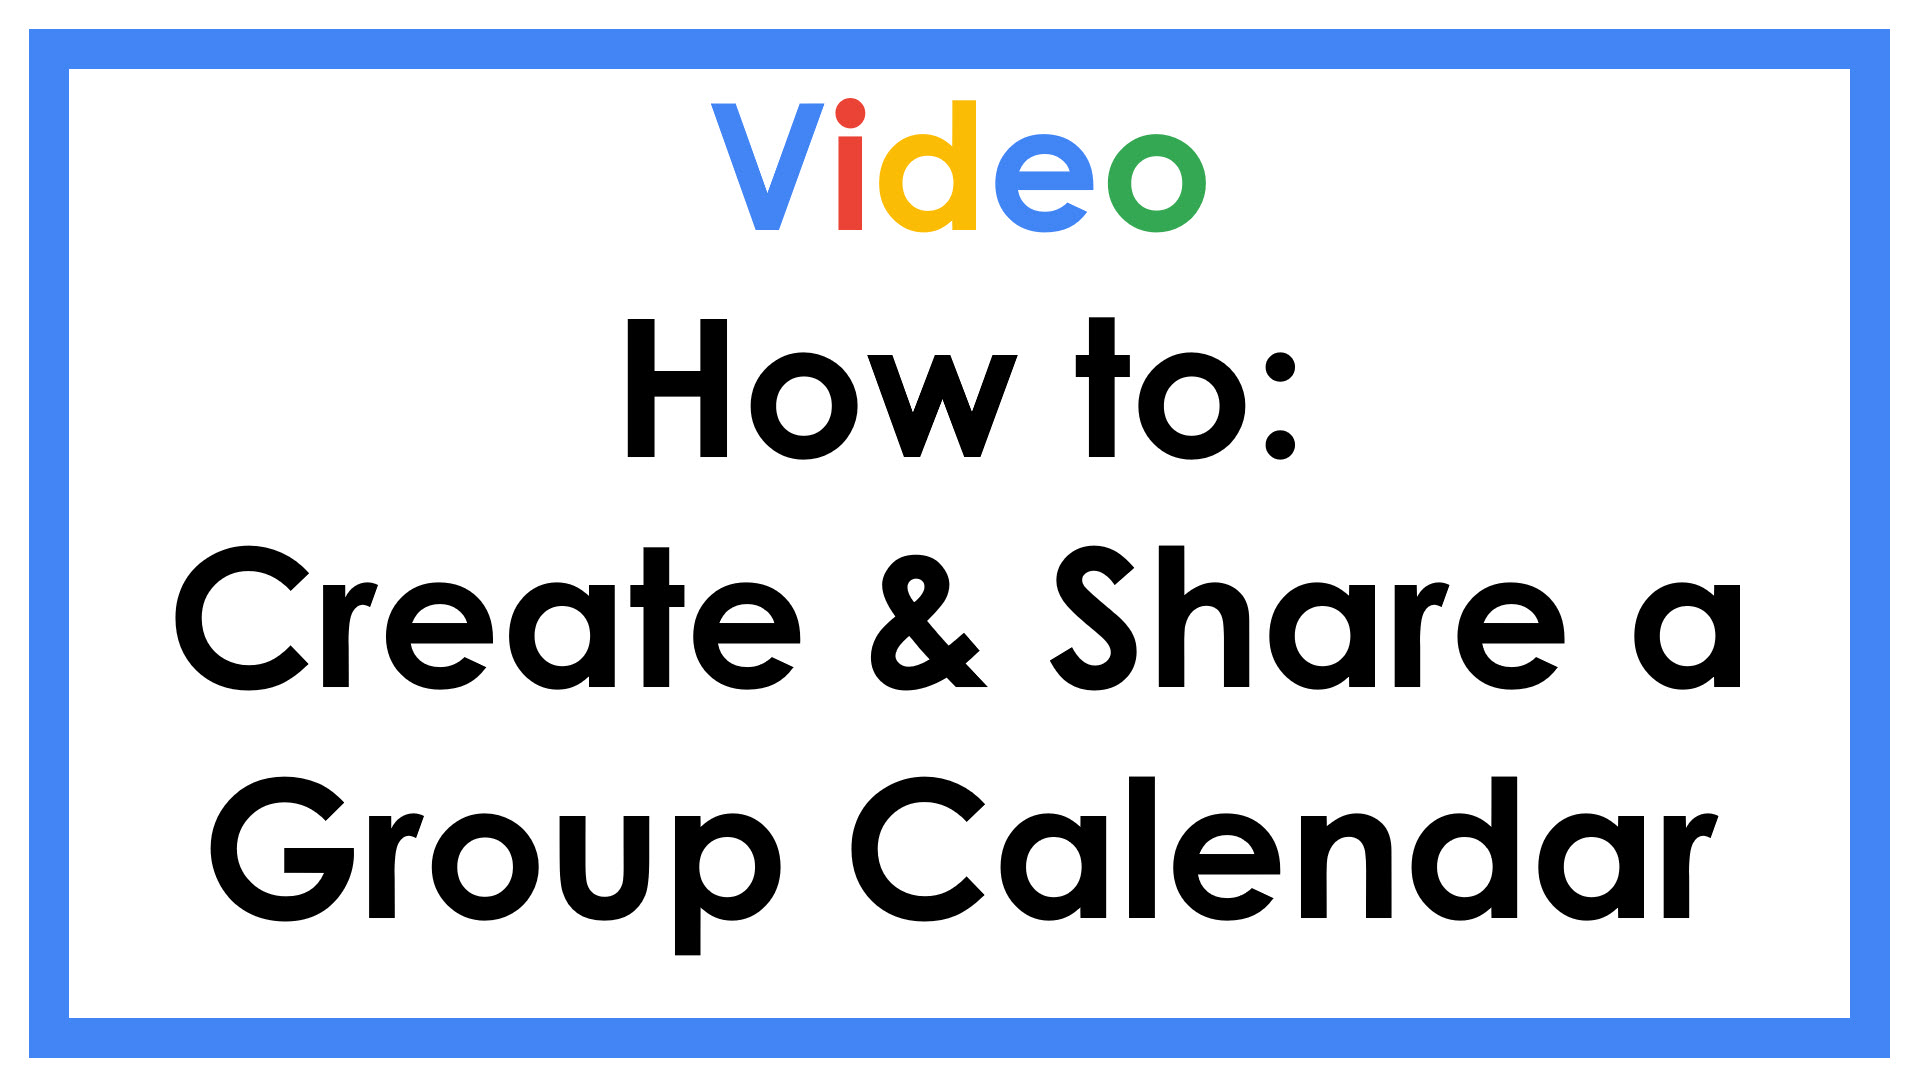 Video How To: Create & Share a Group cALENDAR